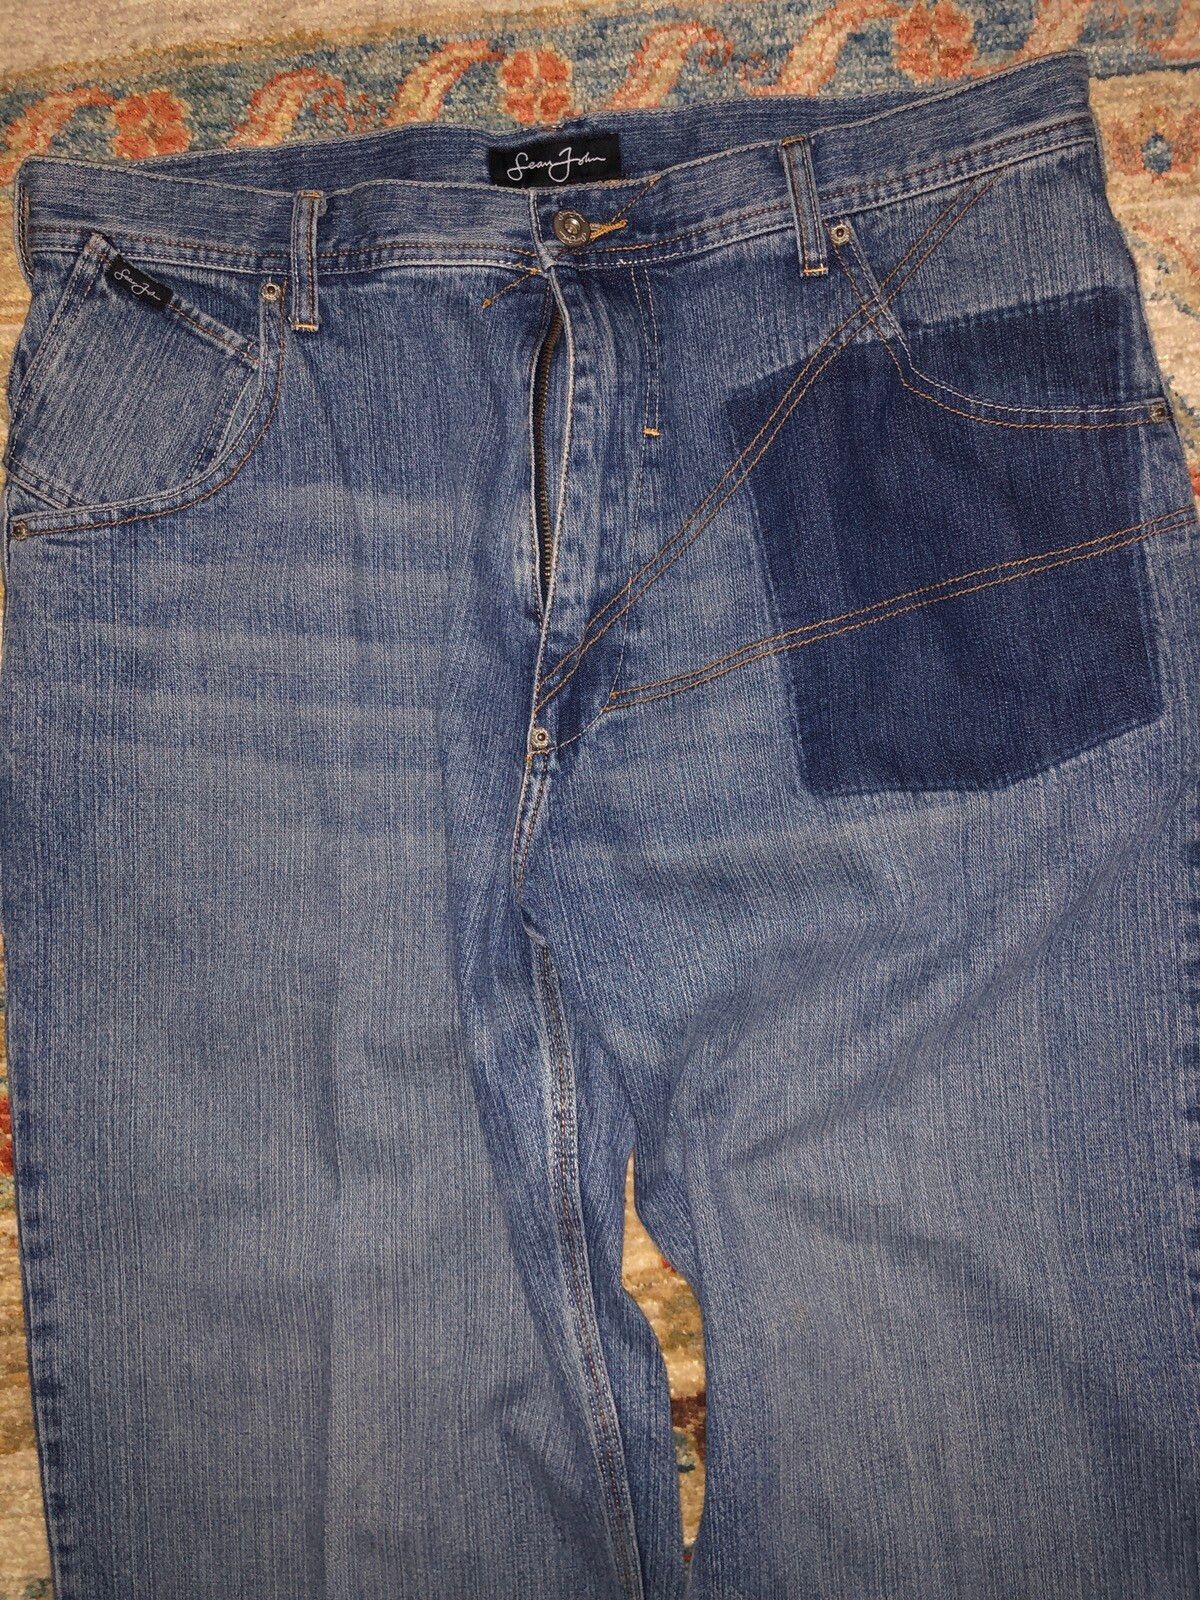 Vintage VTG Sean John Baggy Blue Denim Jeans 36x30 Size US 36 / EU 52 - 1 Preview